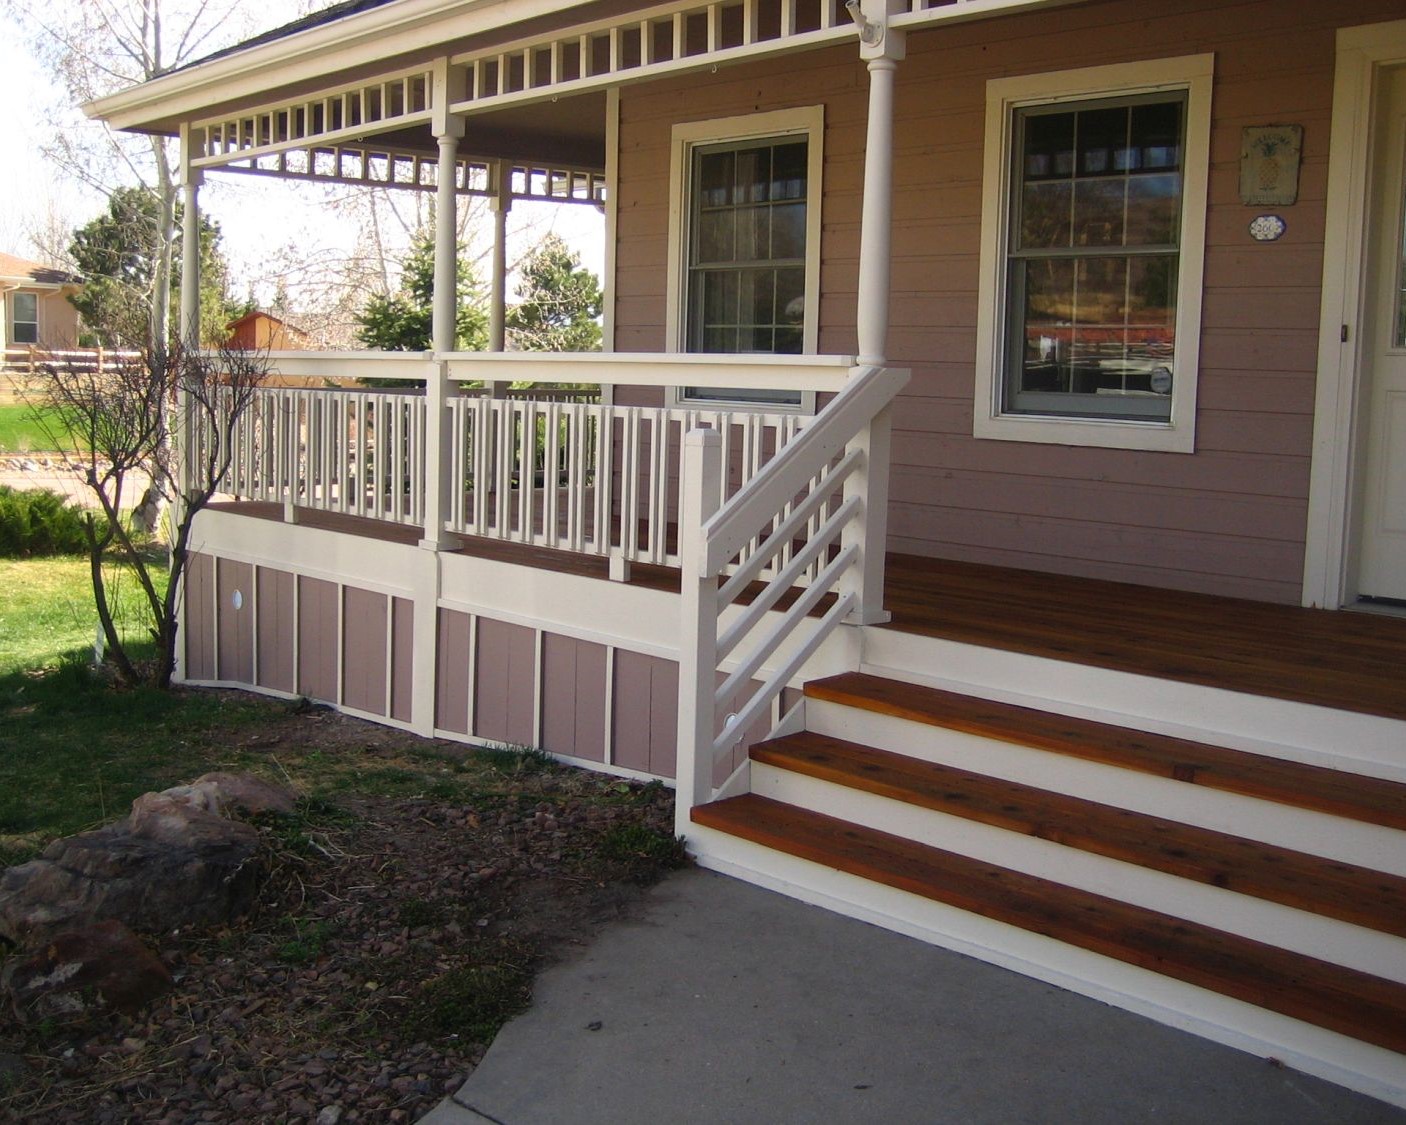 A front porch featuring a redwood snow fence railing with a unique rectangular design element.